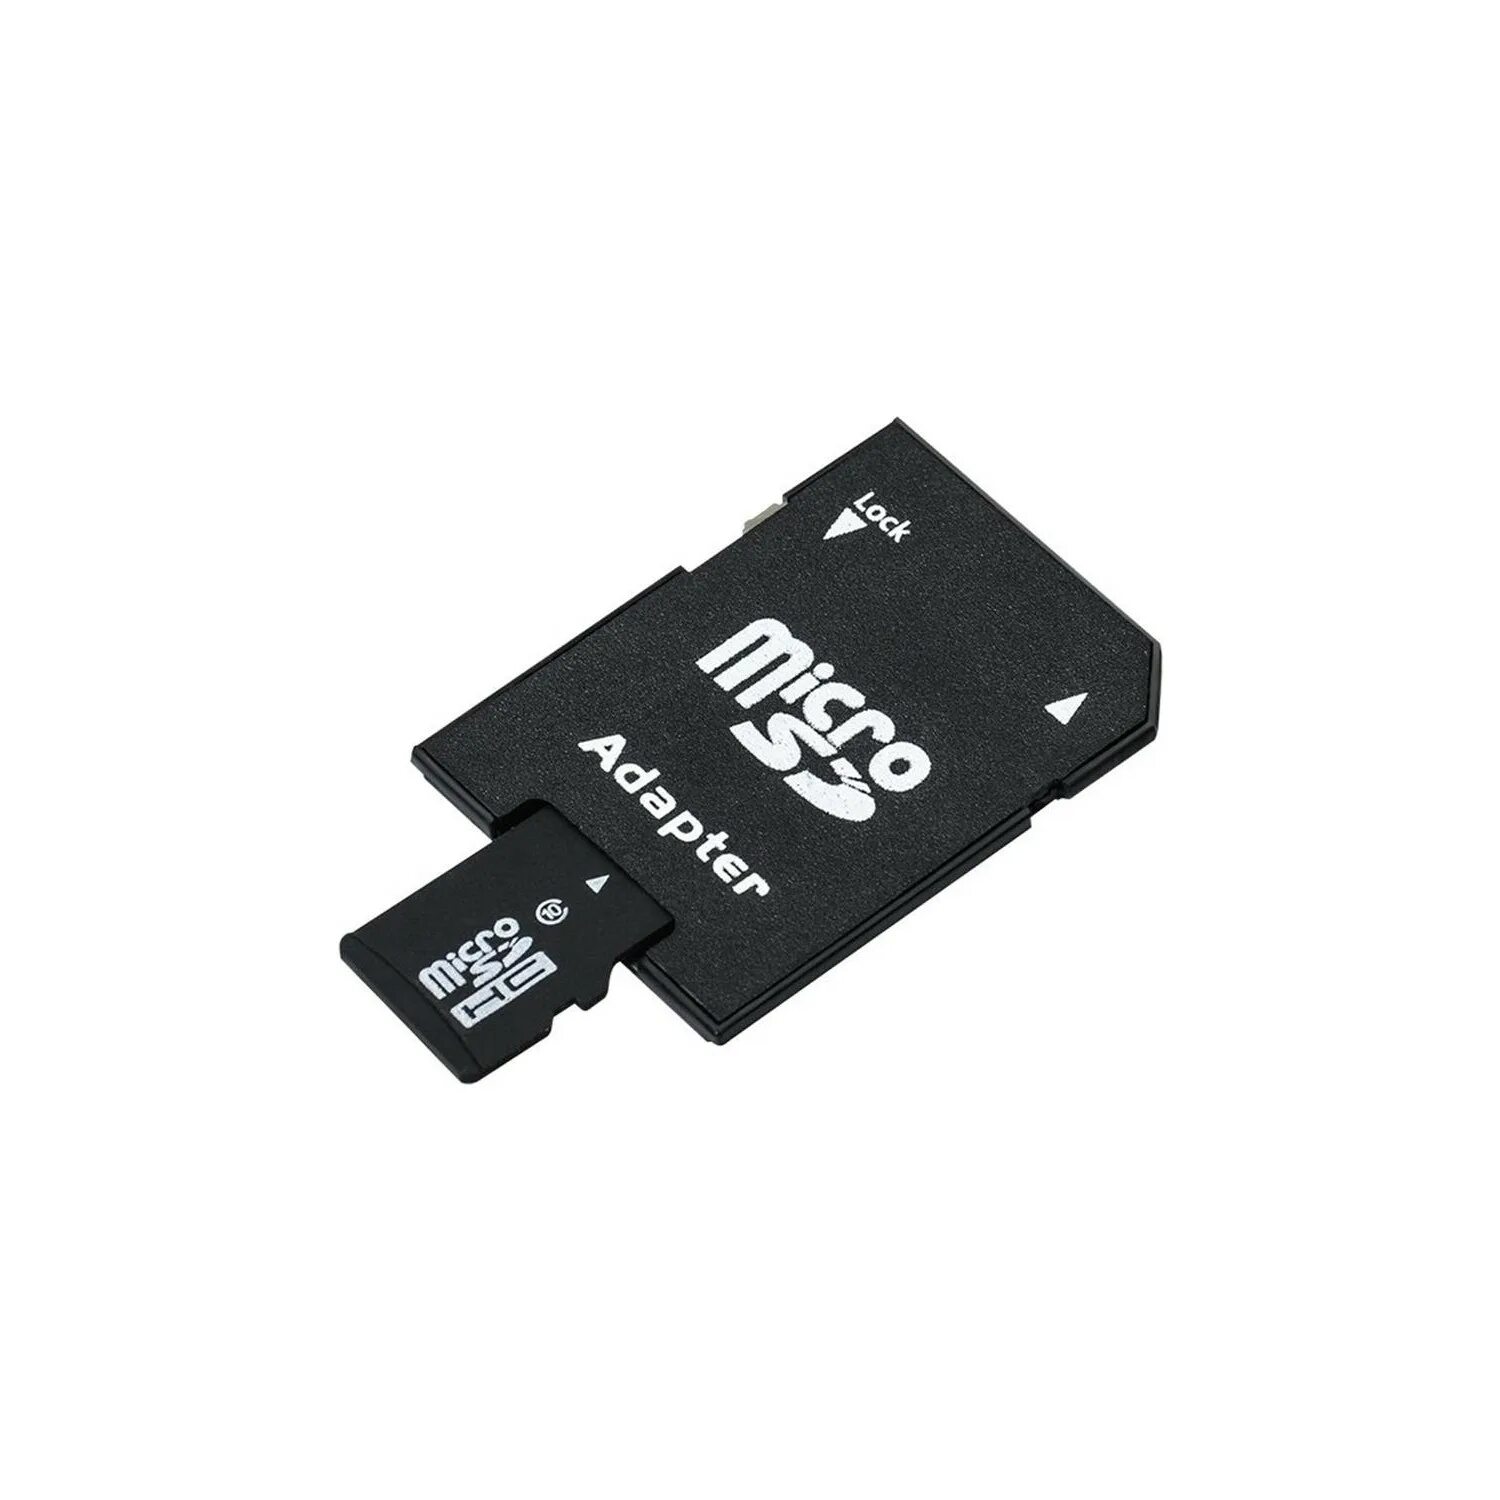 Адаптер MICROSD SD. Адаптер картридер для микро SD. Адаптер MICROSD/MMC. Картридер для микро SD карта внутренняя.